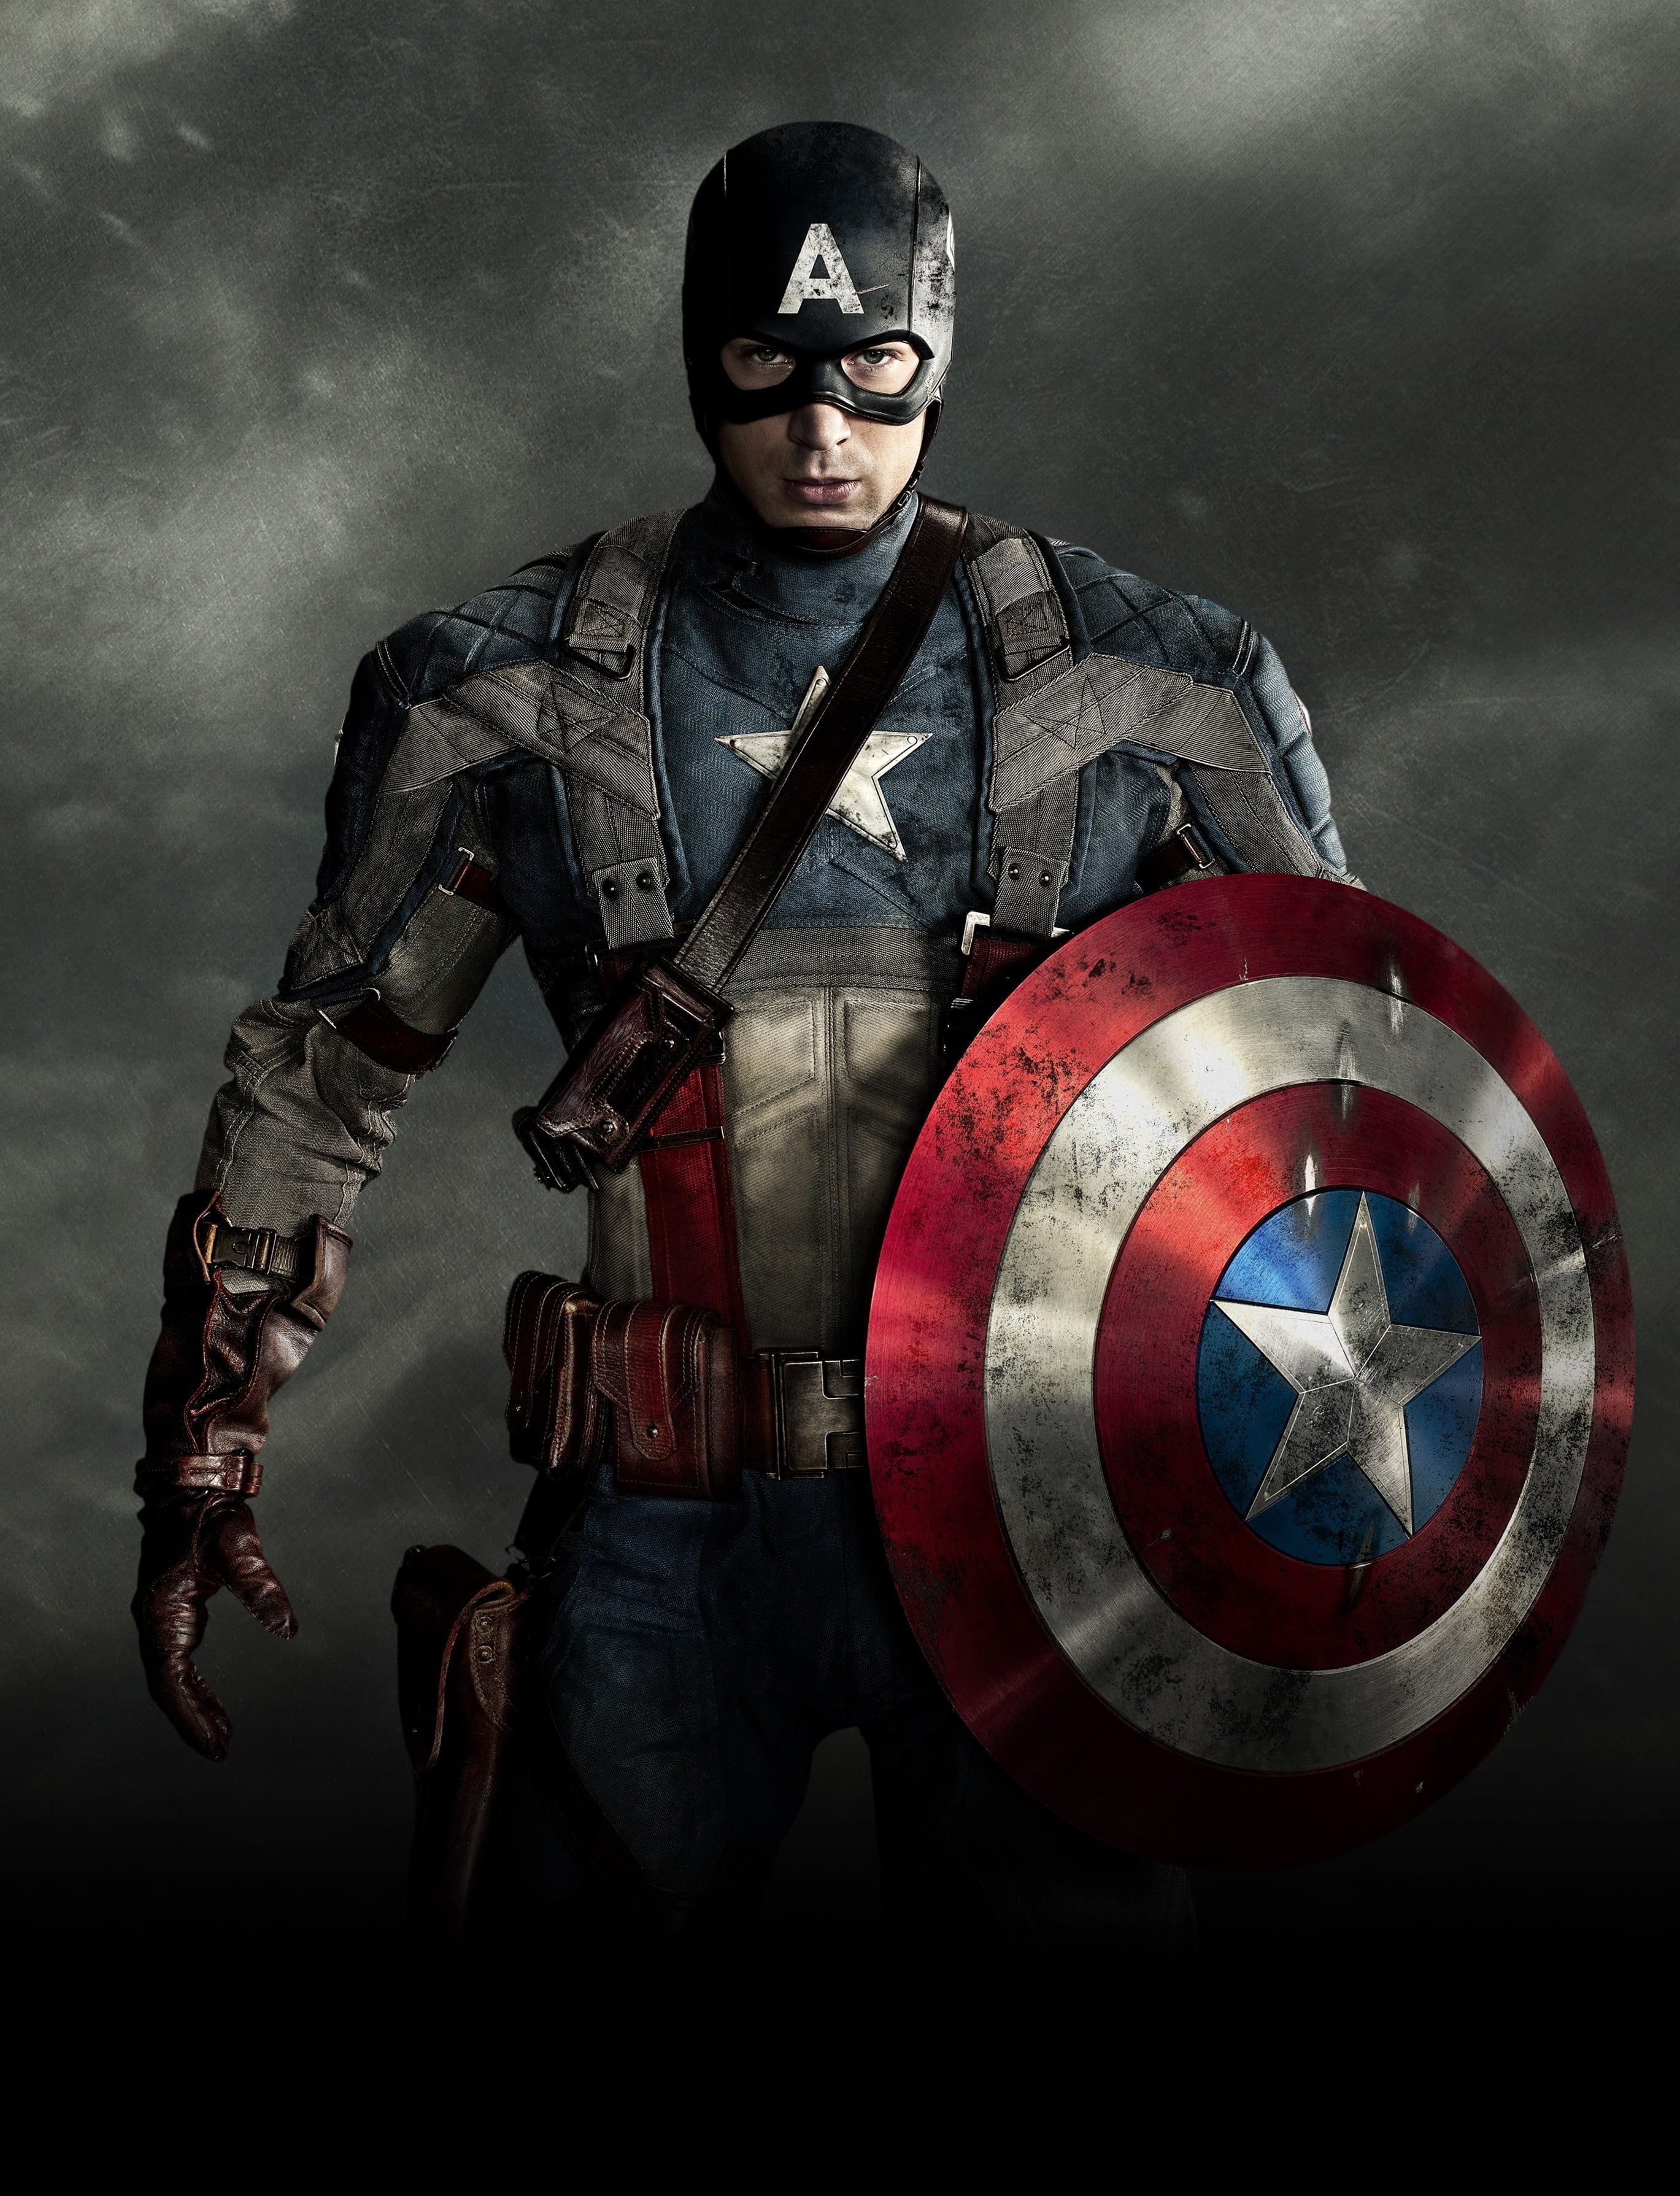 Captain America digital wallpaper Captain America Chris Evans Captain America: The First Avenger K. Captain america wallpaper, Captain america, Avengers poster